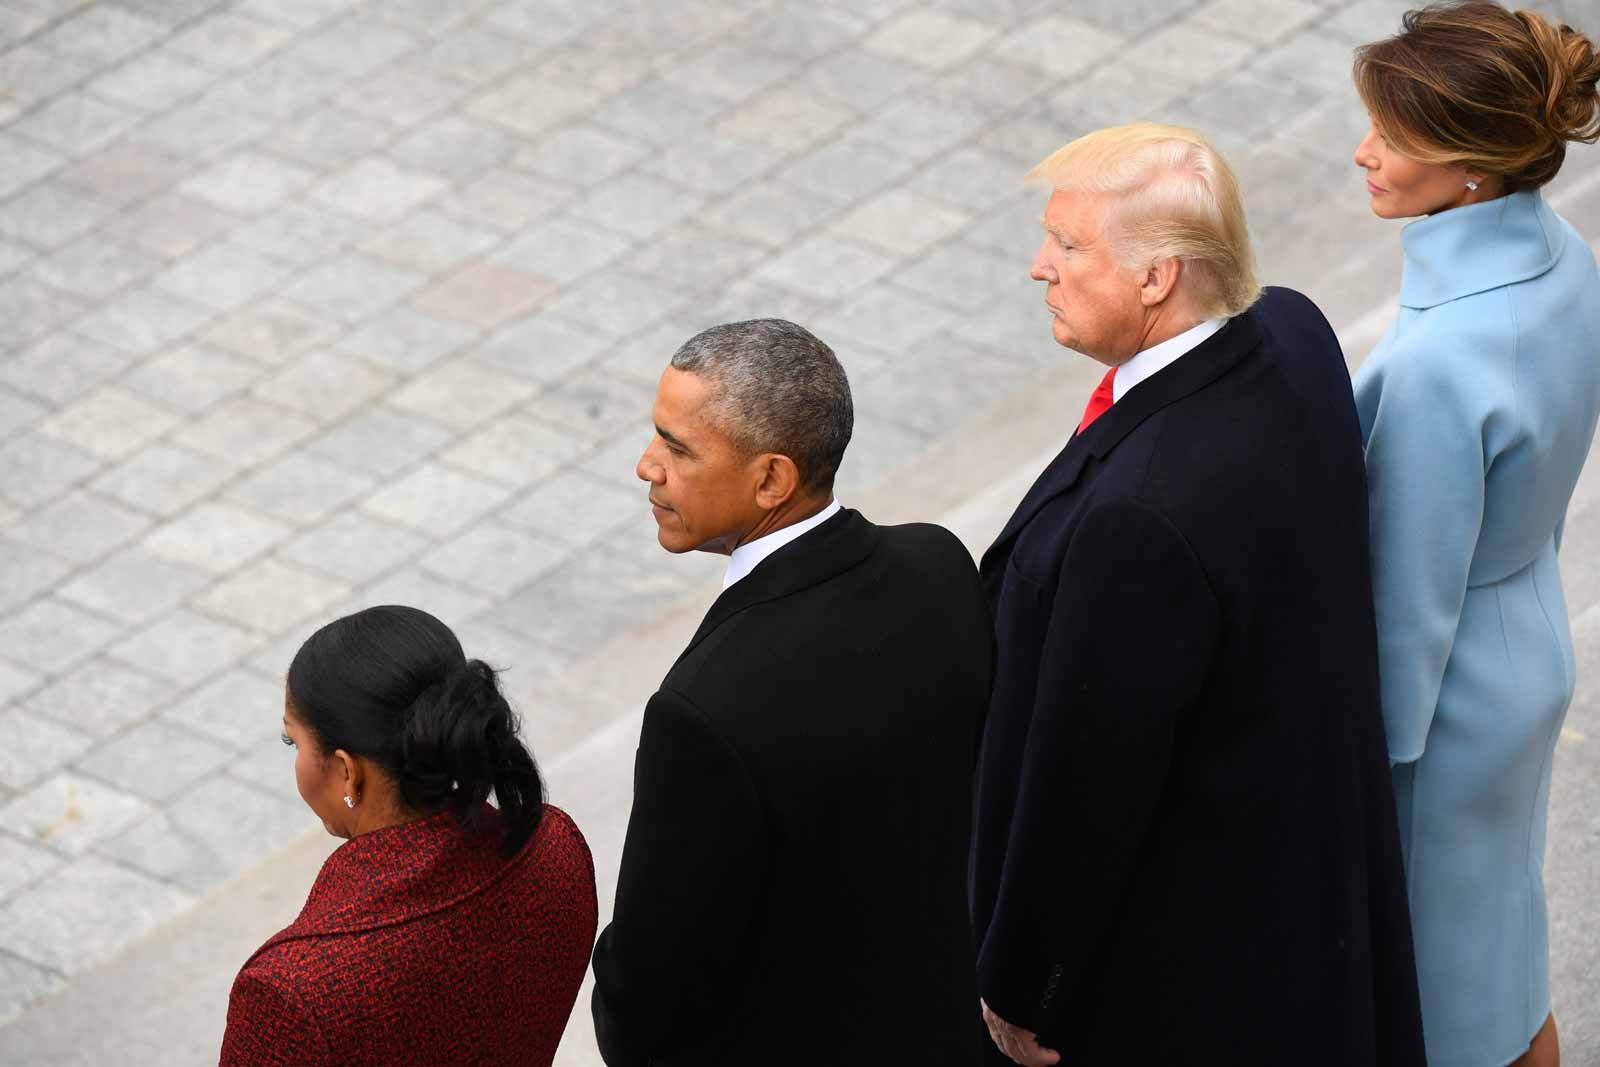 Former First Lady Michelle Obama, former President Barack Obama, President Donald Trump, and First Lady Melania Trump at the 2017 Presidential Inauguration, Washington, D.C., January 20, 2017